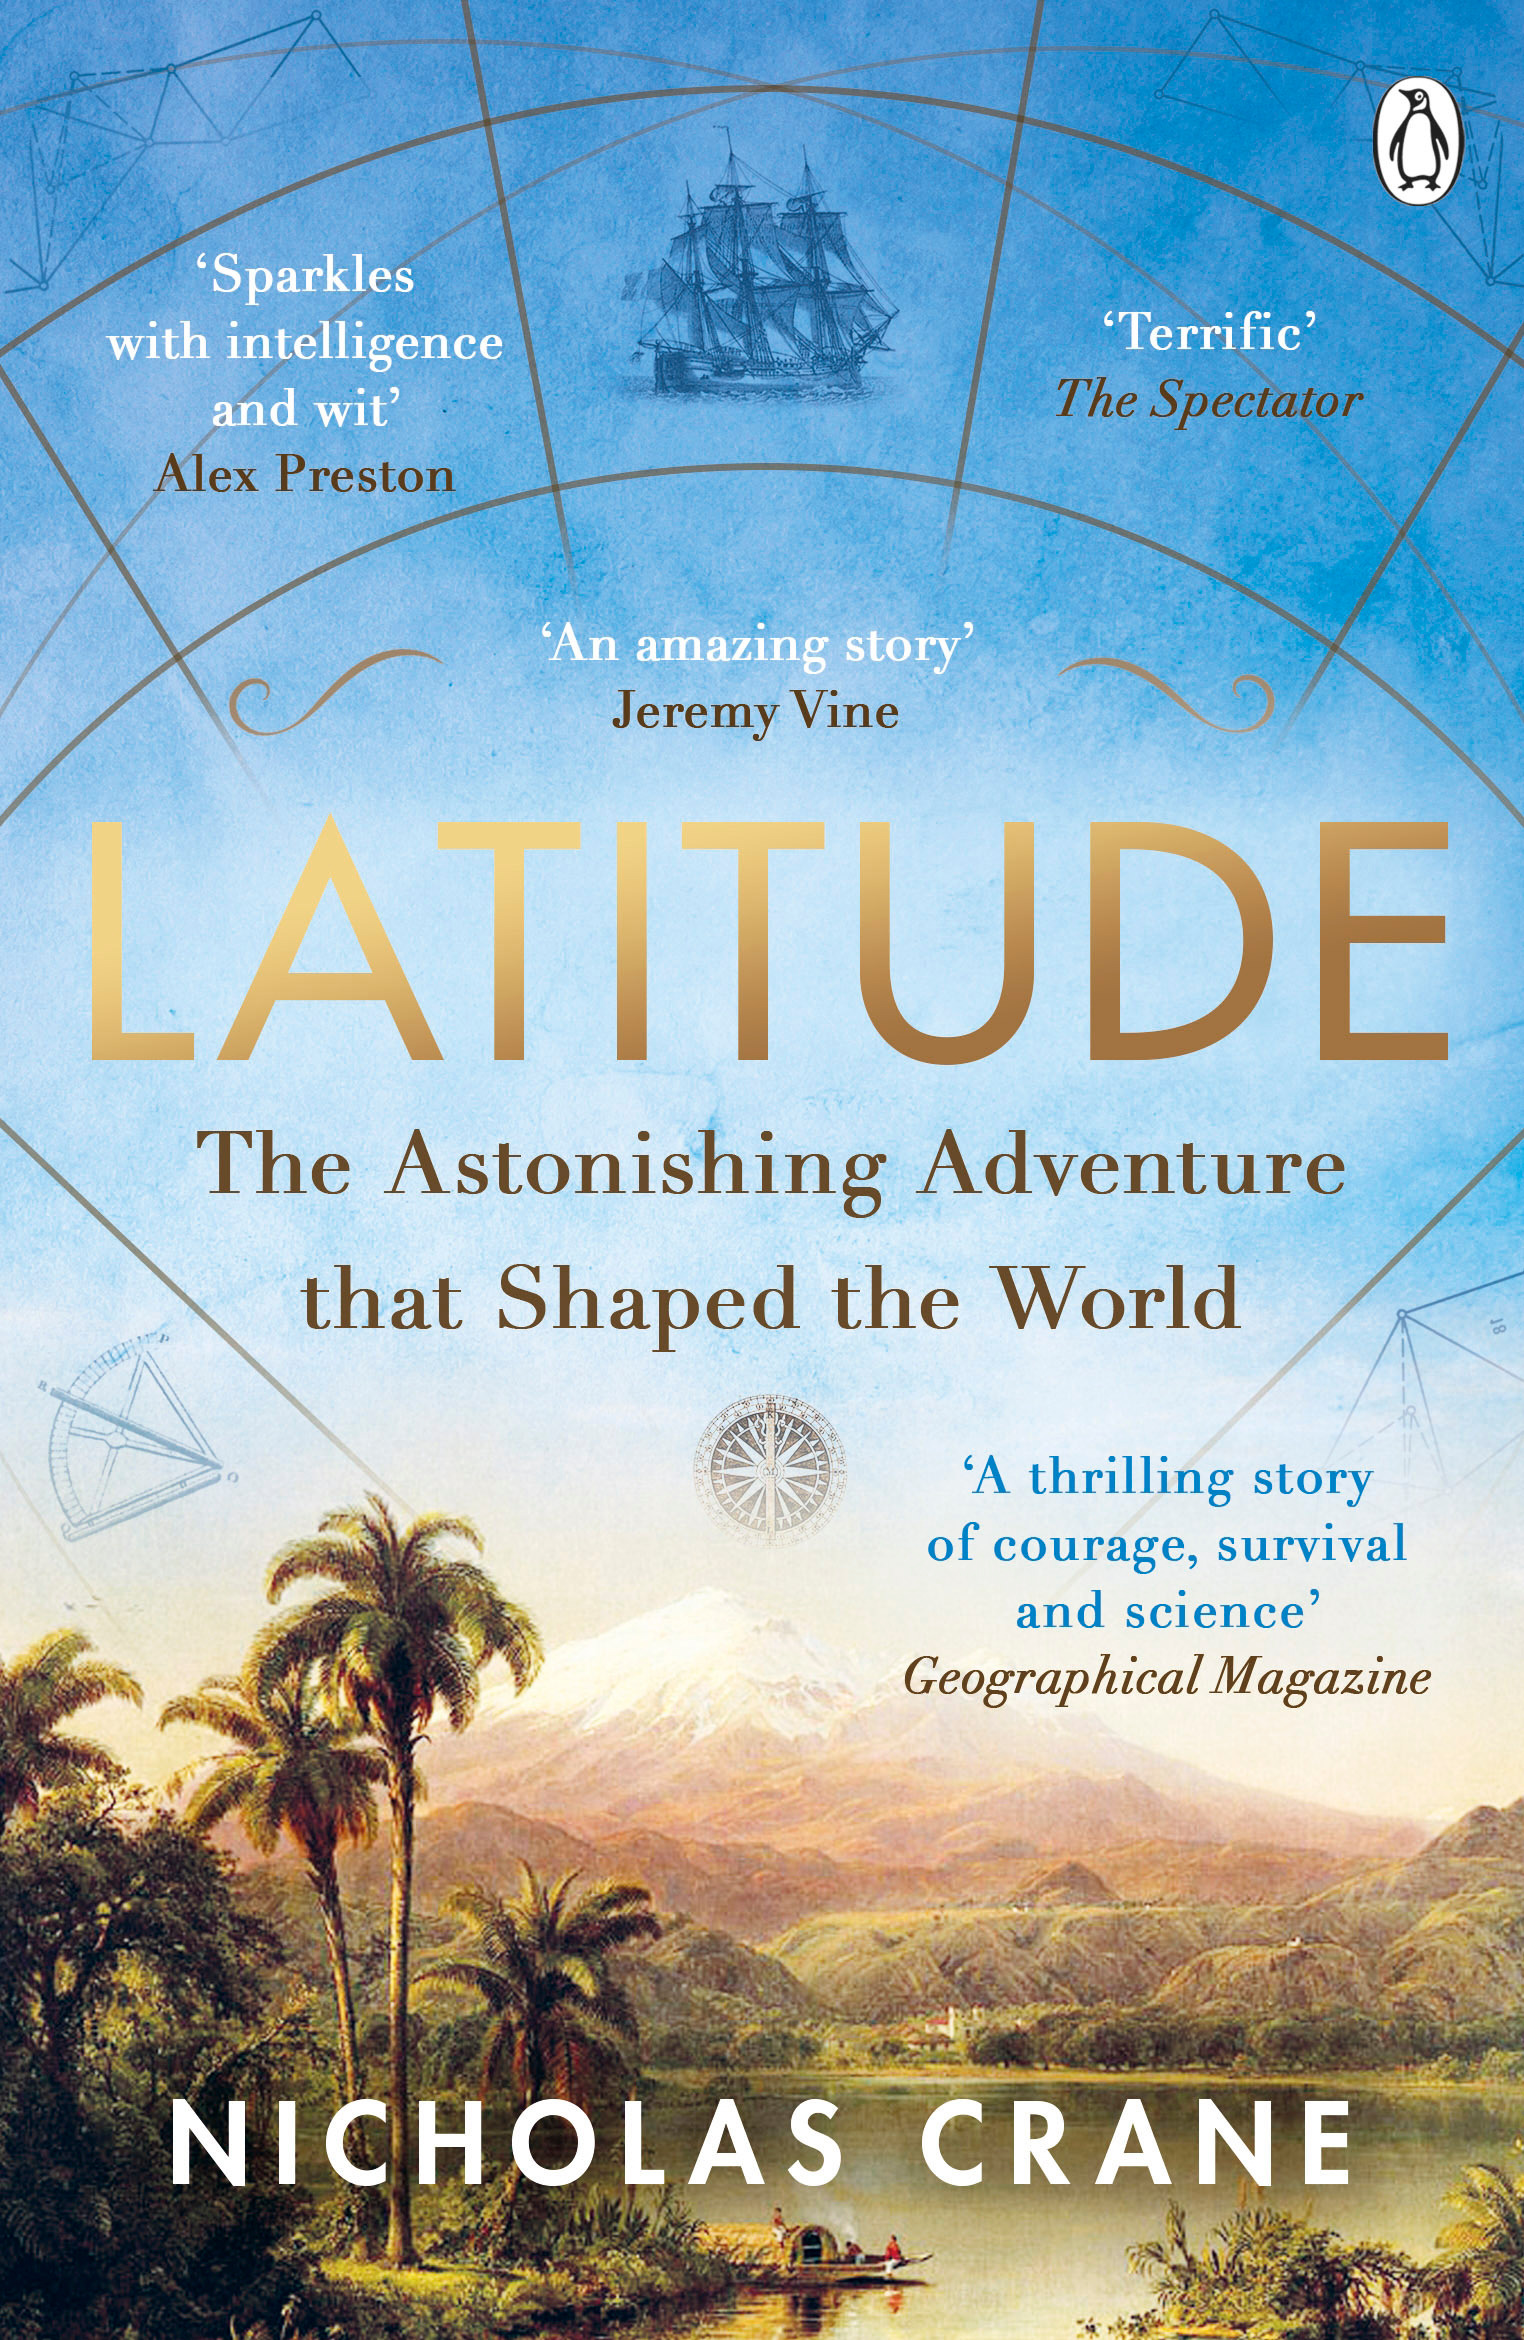 Latitude : The astonishing adventure that shaped the world | Biography & Memoir